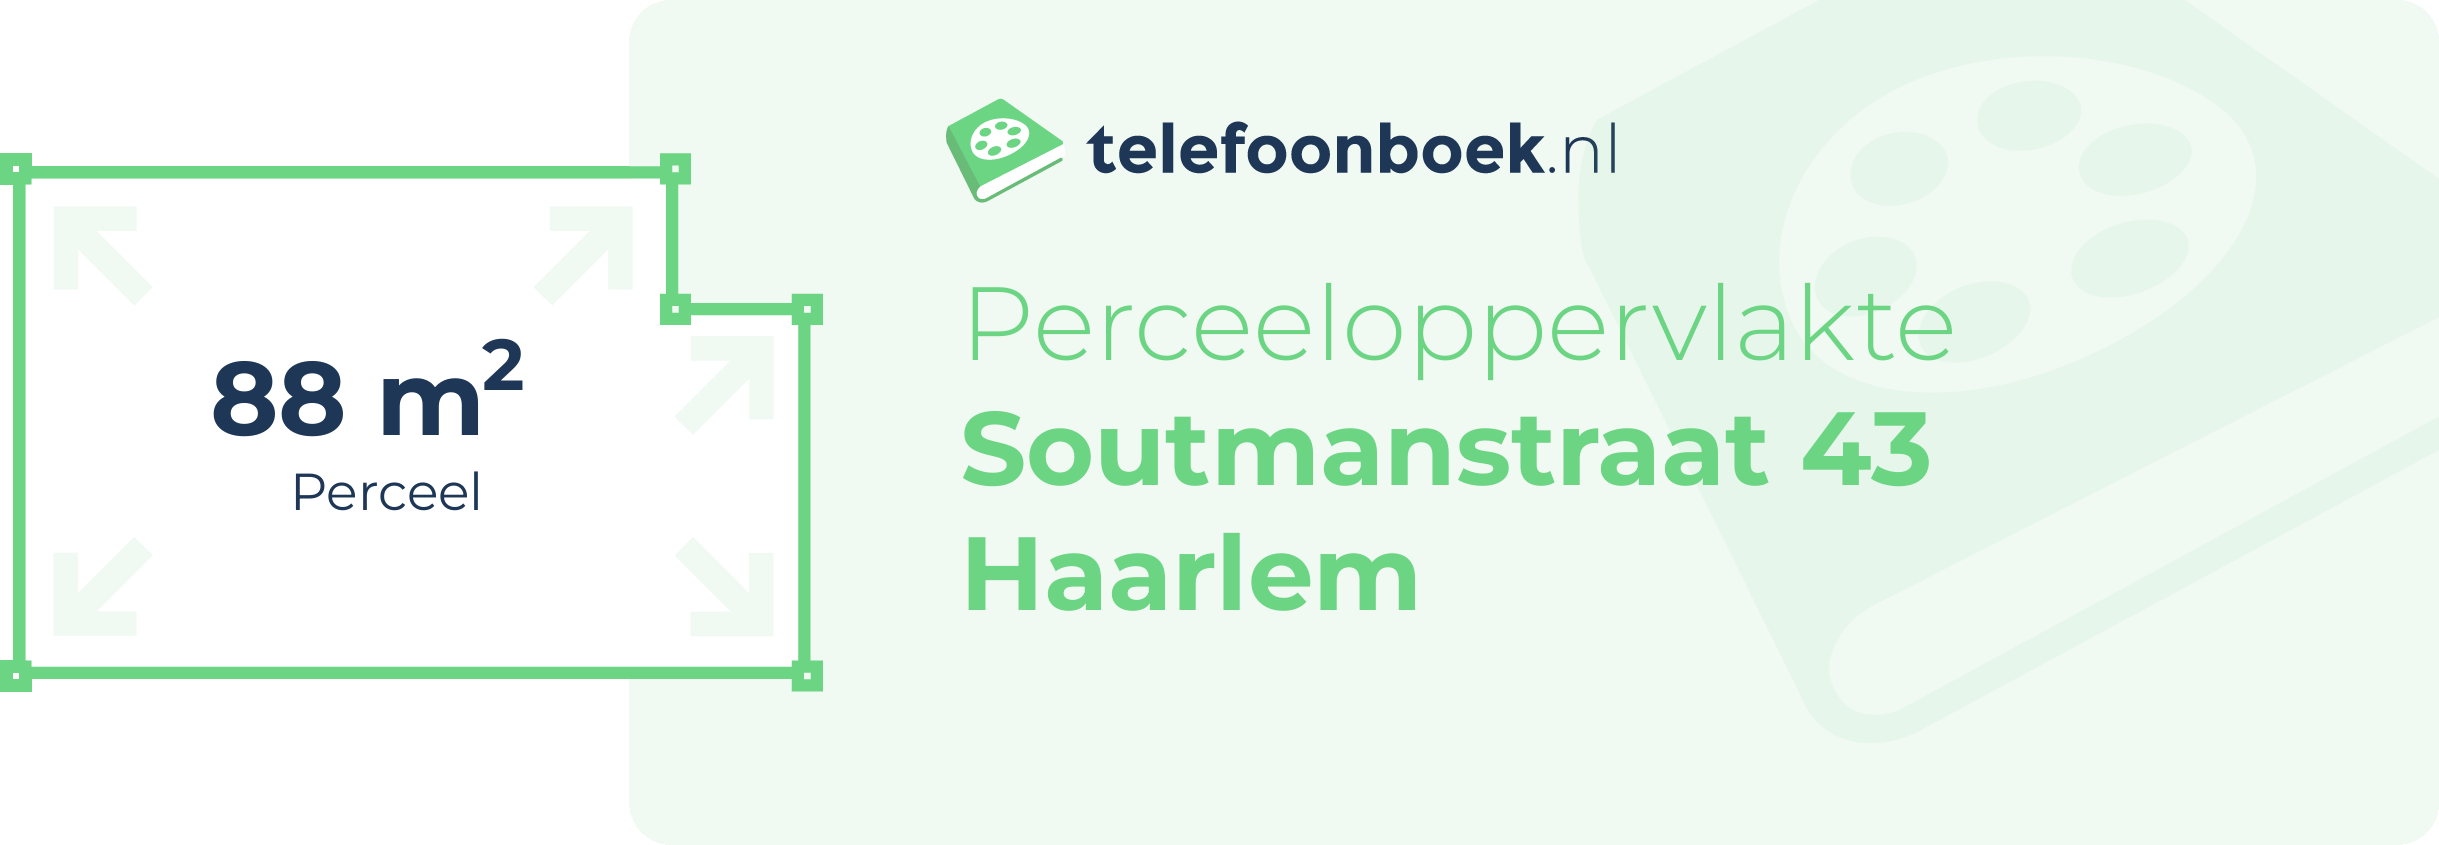 Perceeloppervlakte Soutmanstraat 43 Haarlem